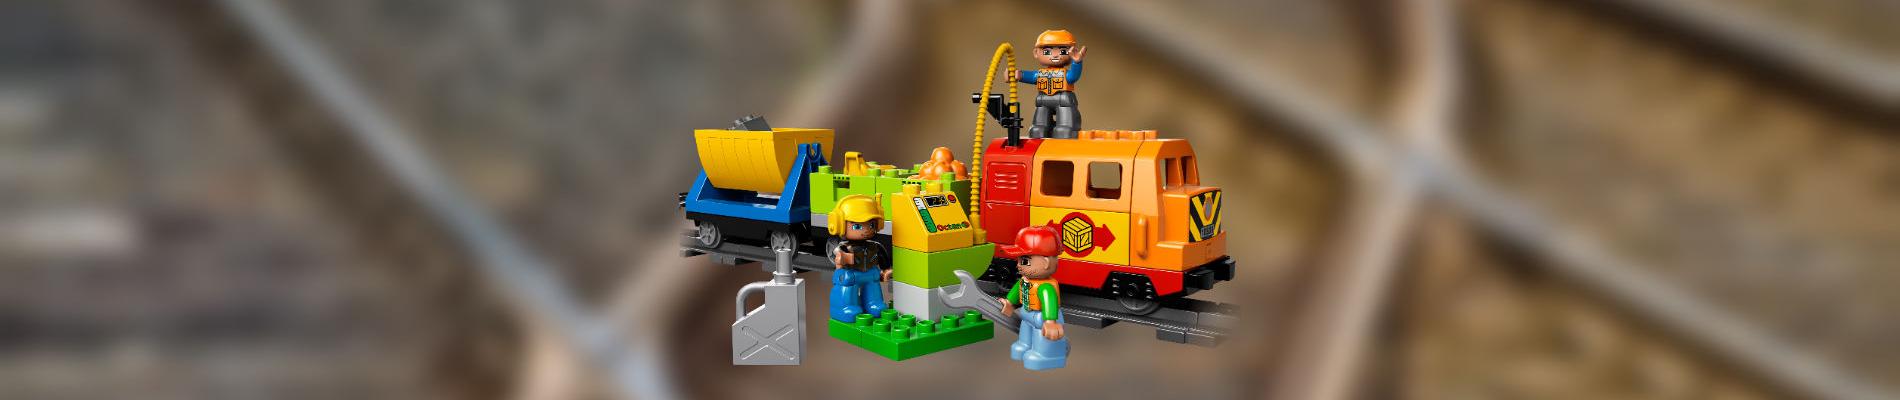 Lego Duplo train engine with blurred train rails as background